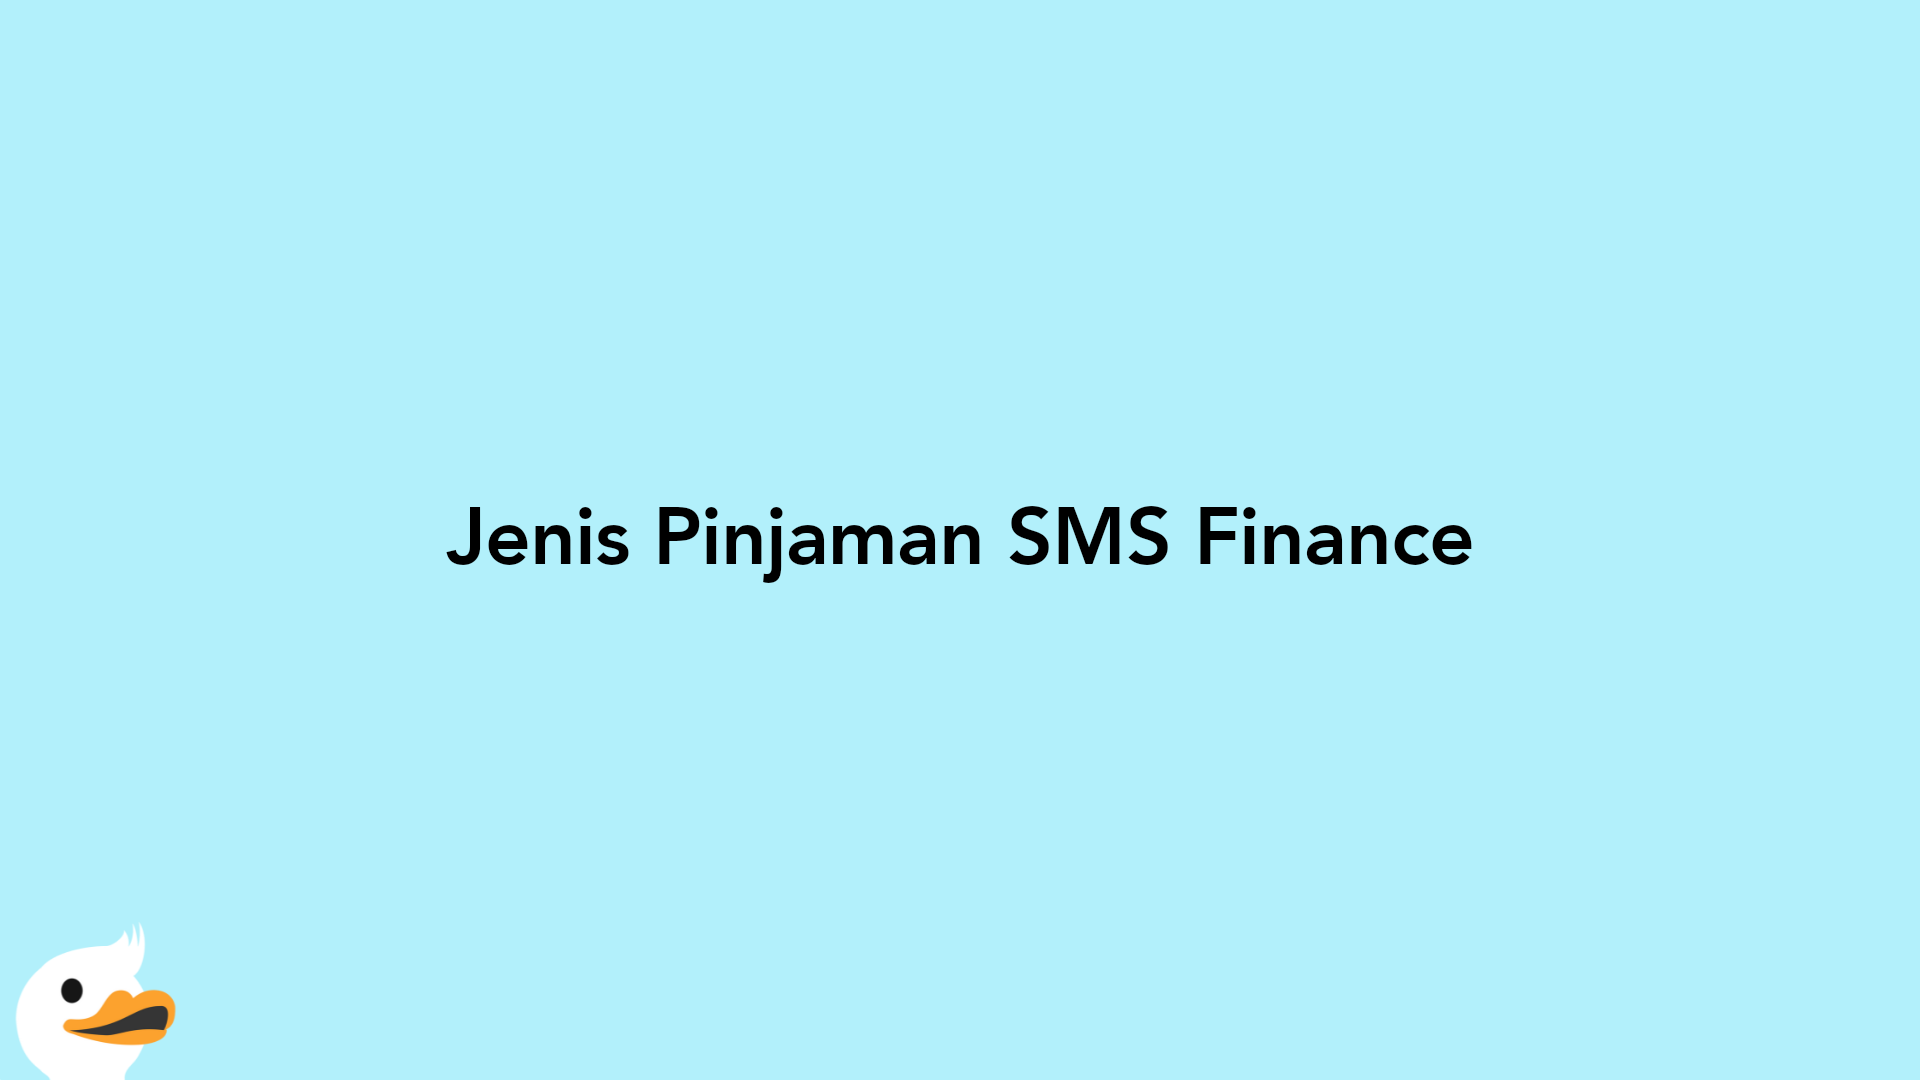 Jenis Pinjaman SMS Finance